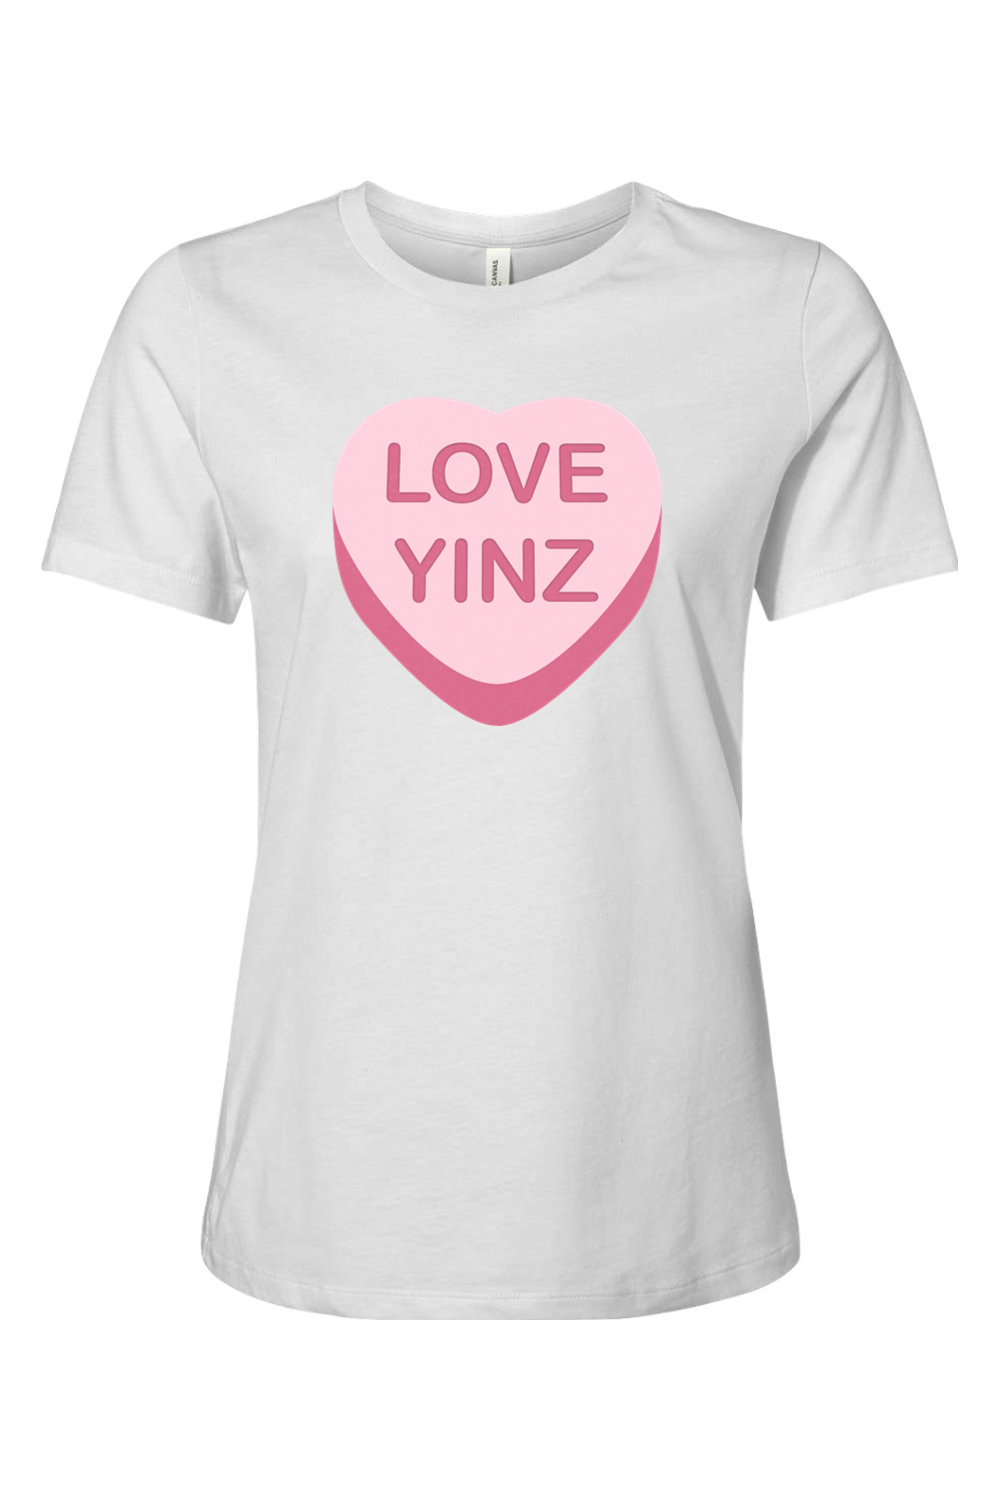 Love Yinz - Conversation Heart - Ladies Tee - Yinzylvania